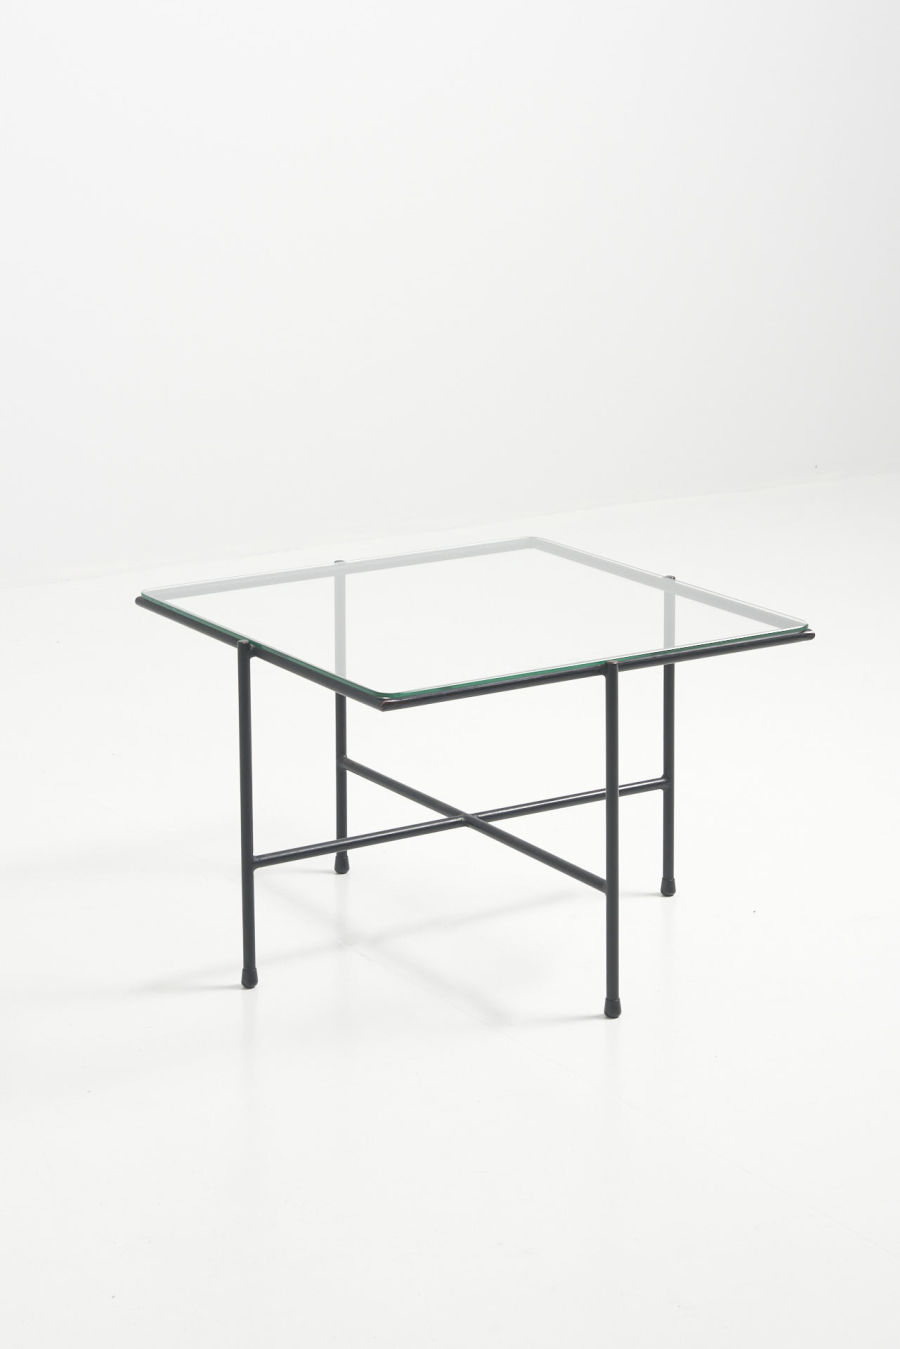 modestfurniture-vintage-2987-low-table-glass-metal-frame04